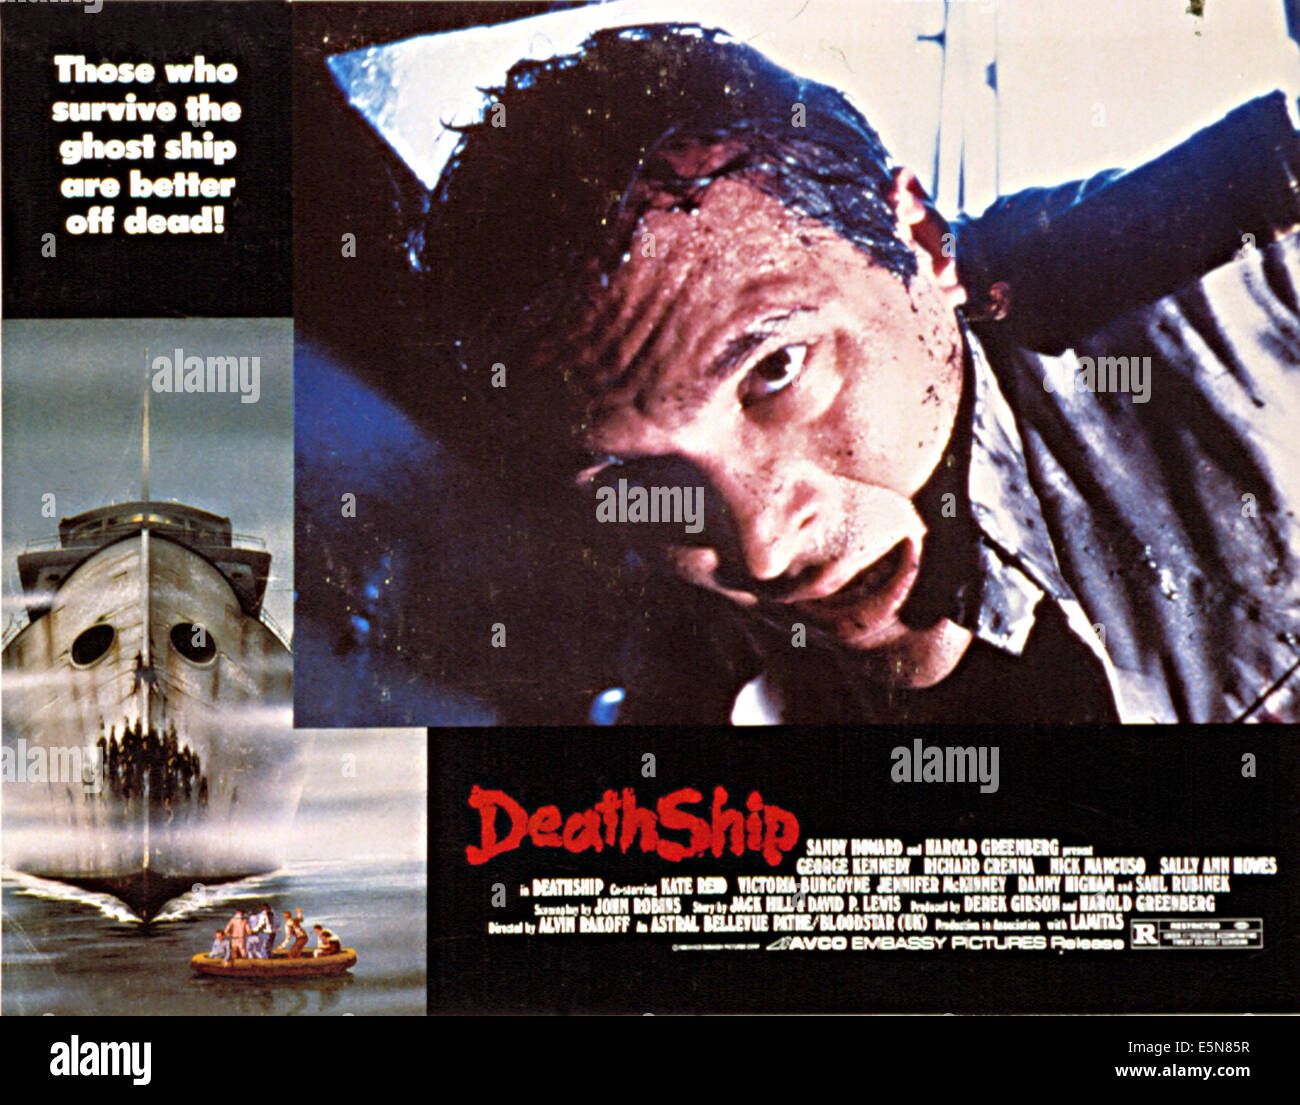 DEATH SHIP, lobby card, poster art, 1980. Stock Photo